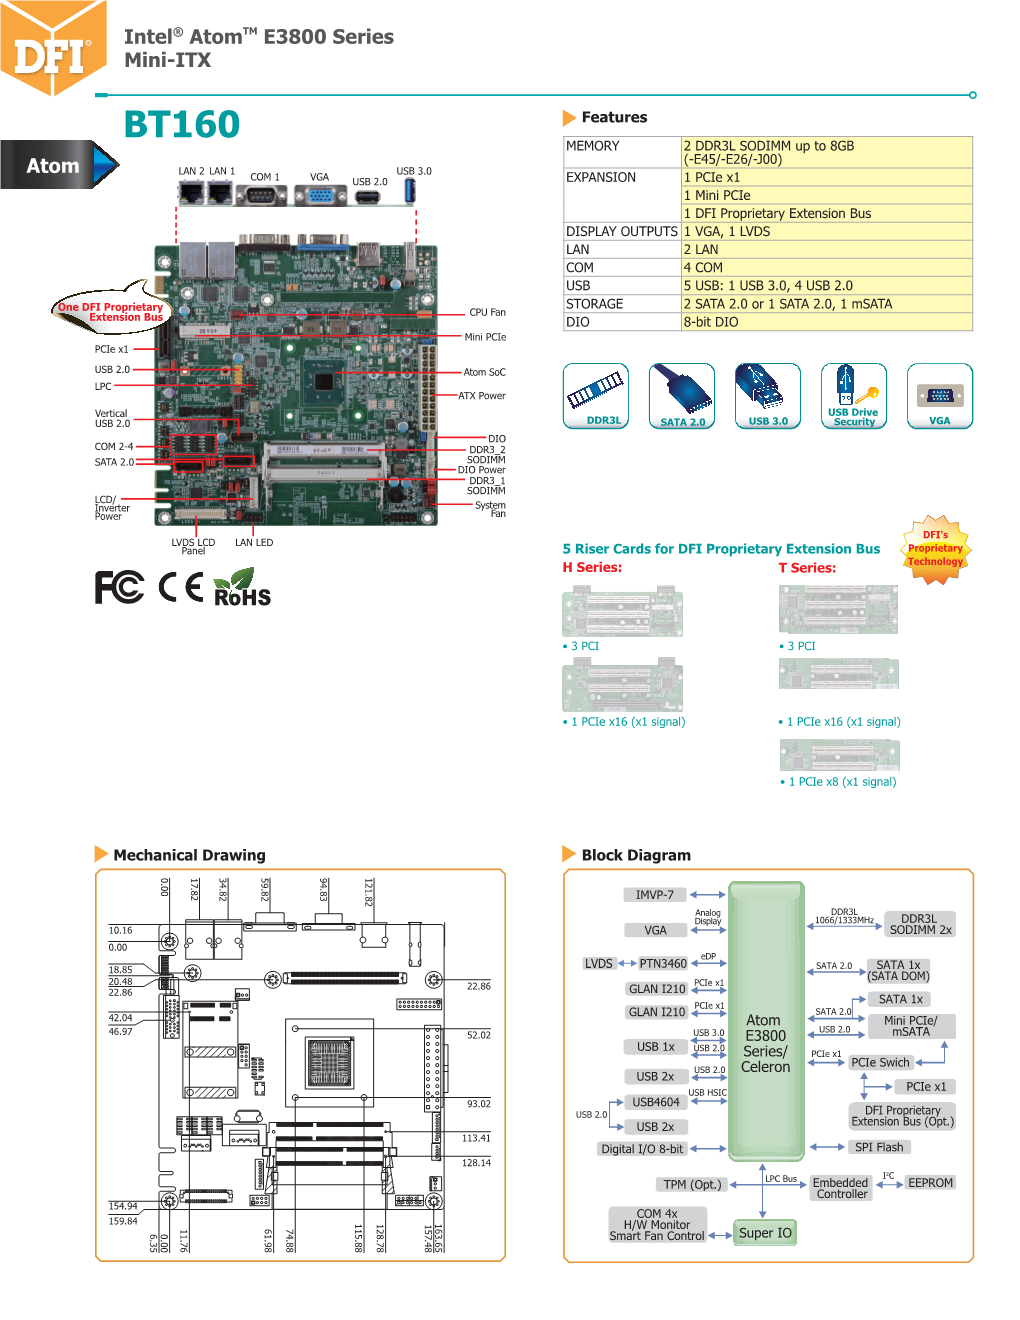 Intel® Atomtm E3800 Series Mini-ITX Atom